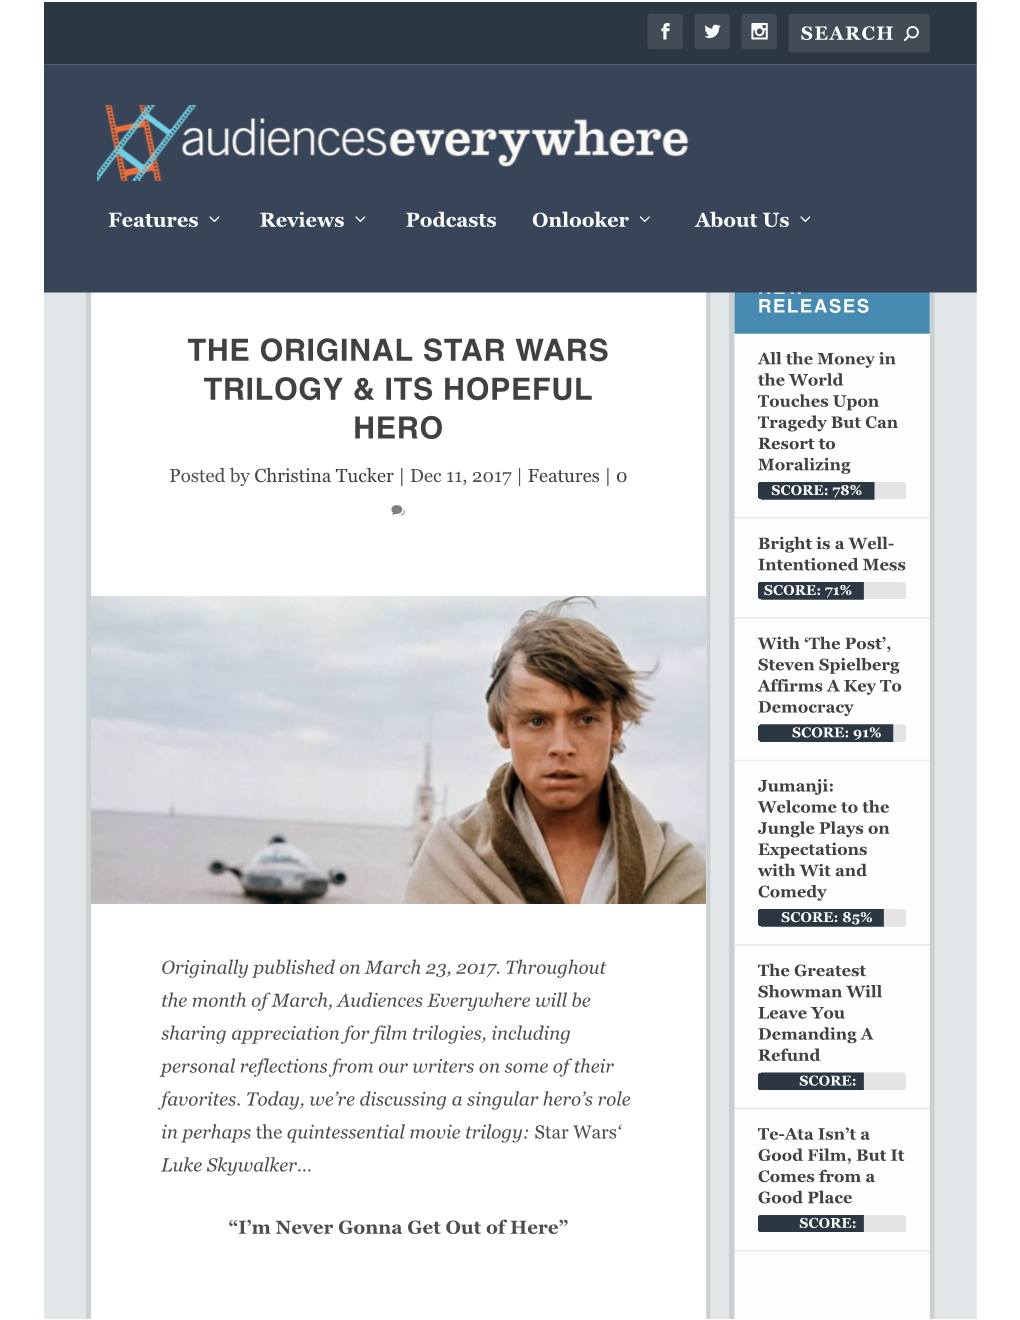 The Original Star Wars Trilogy & Its